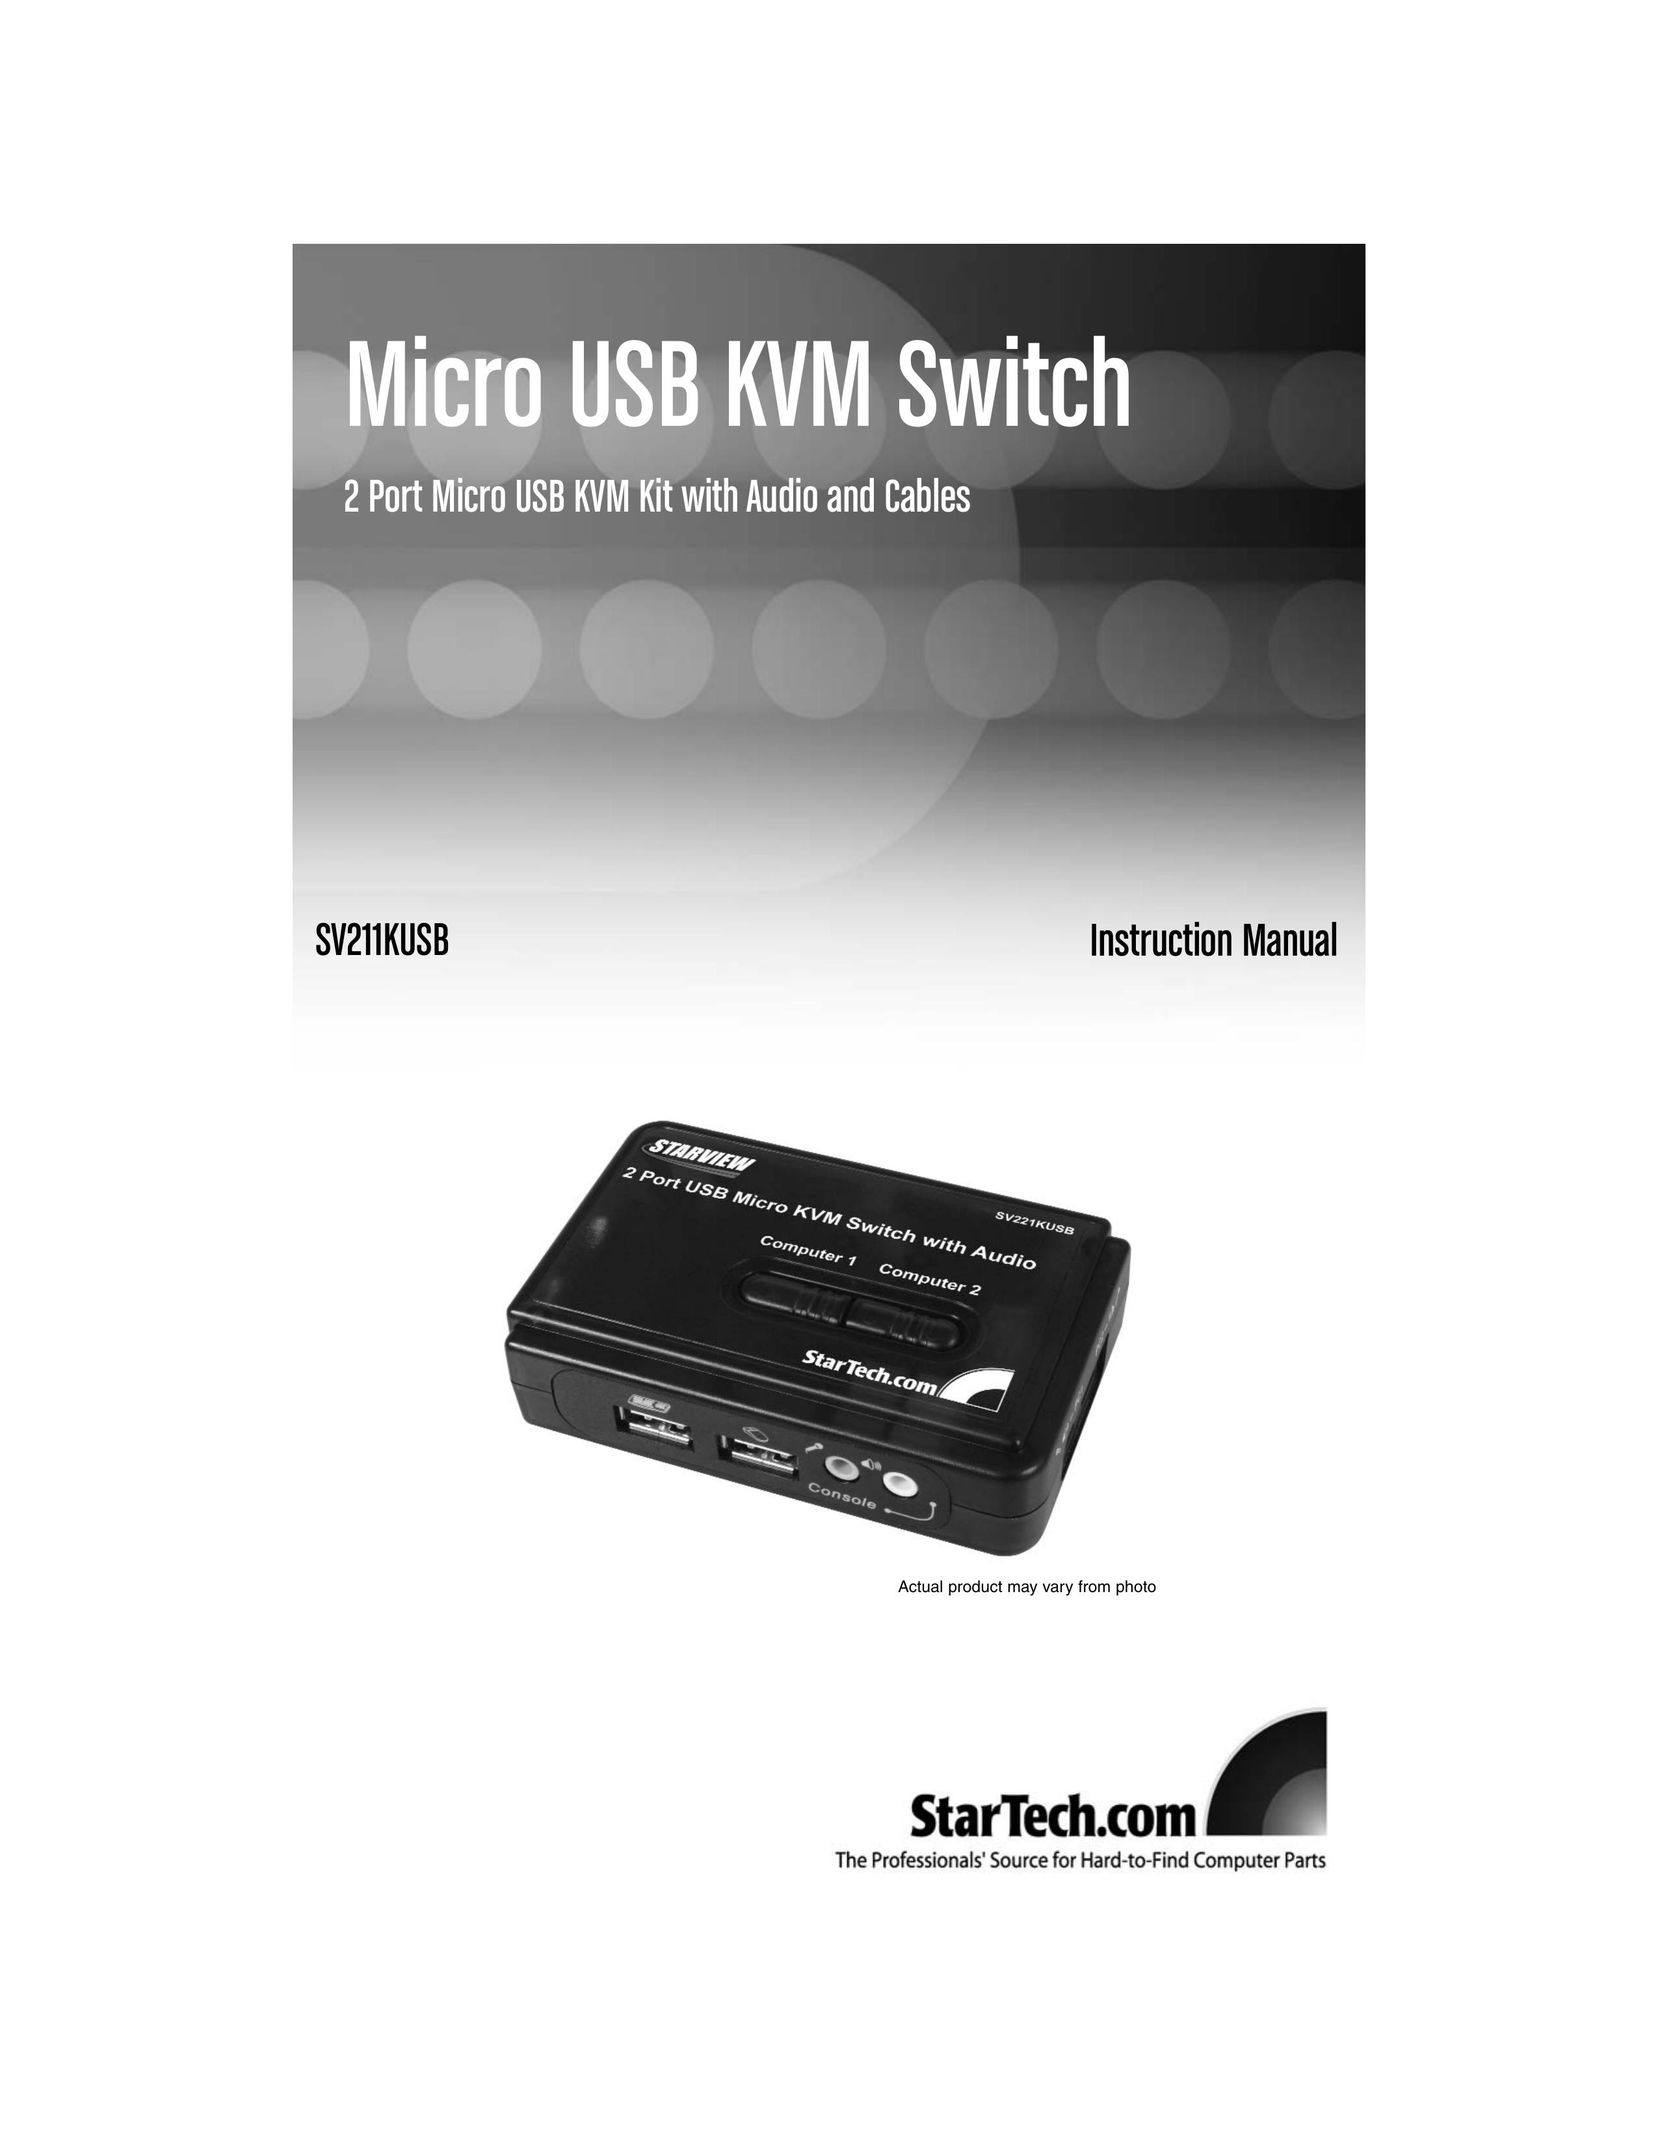 Star Tech Development SV211KUSB Switch User Manual